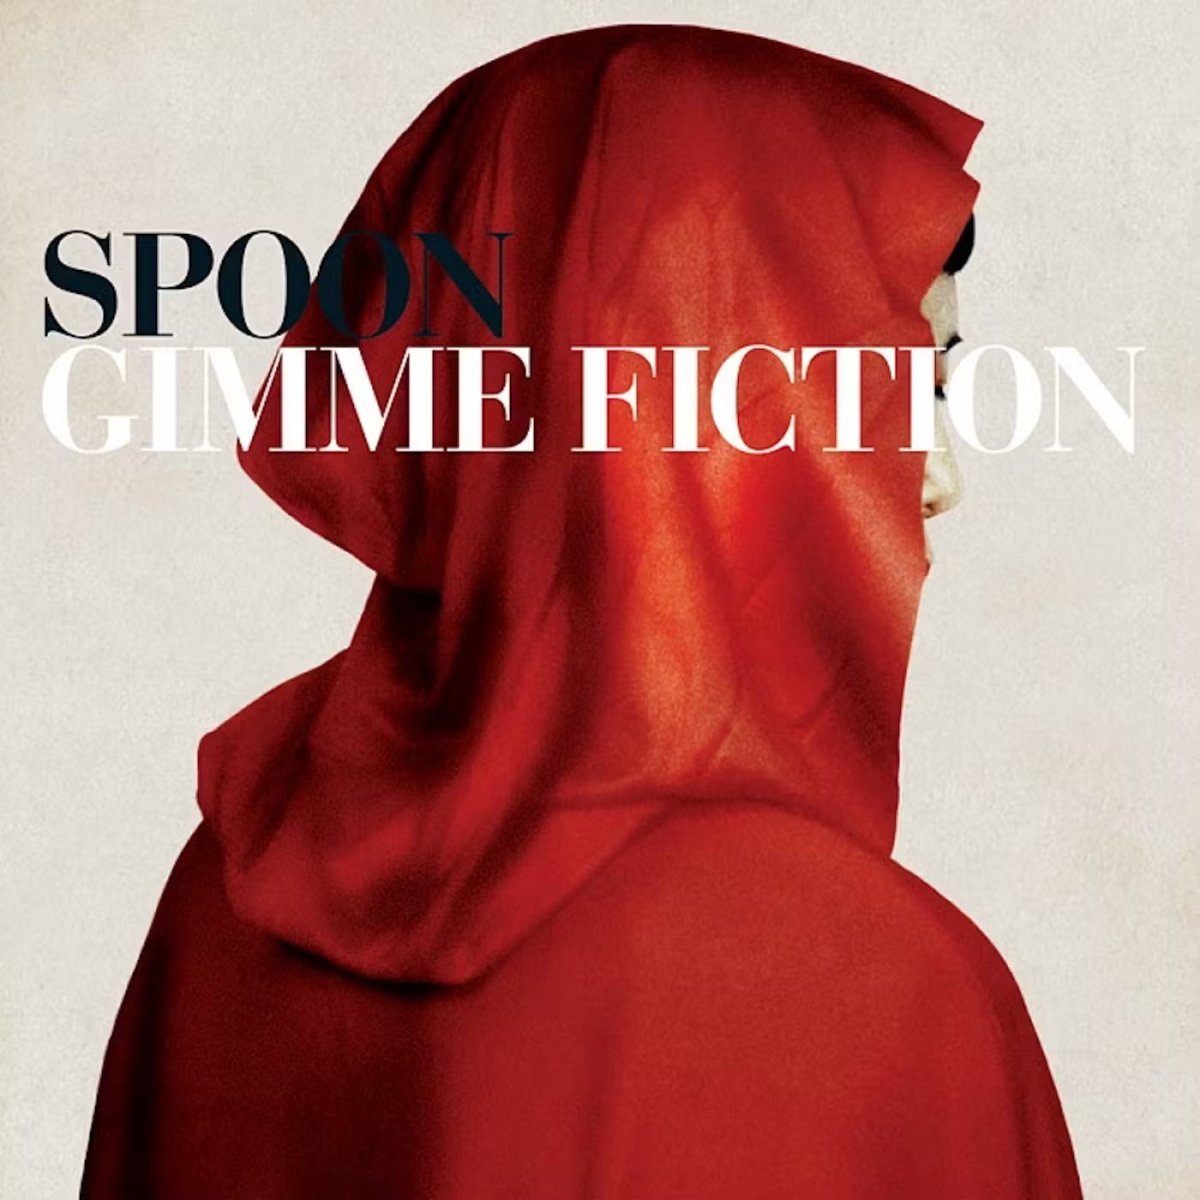 Spoon - Gimme Fiction [Deluxe Reissue 180g Vinyl Record] - Indie Vinyl Den